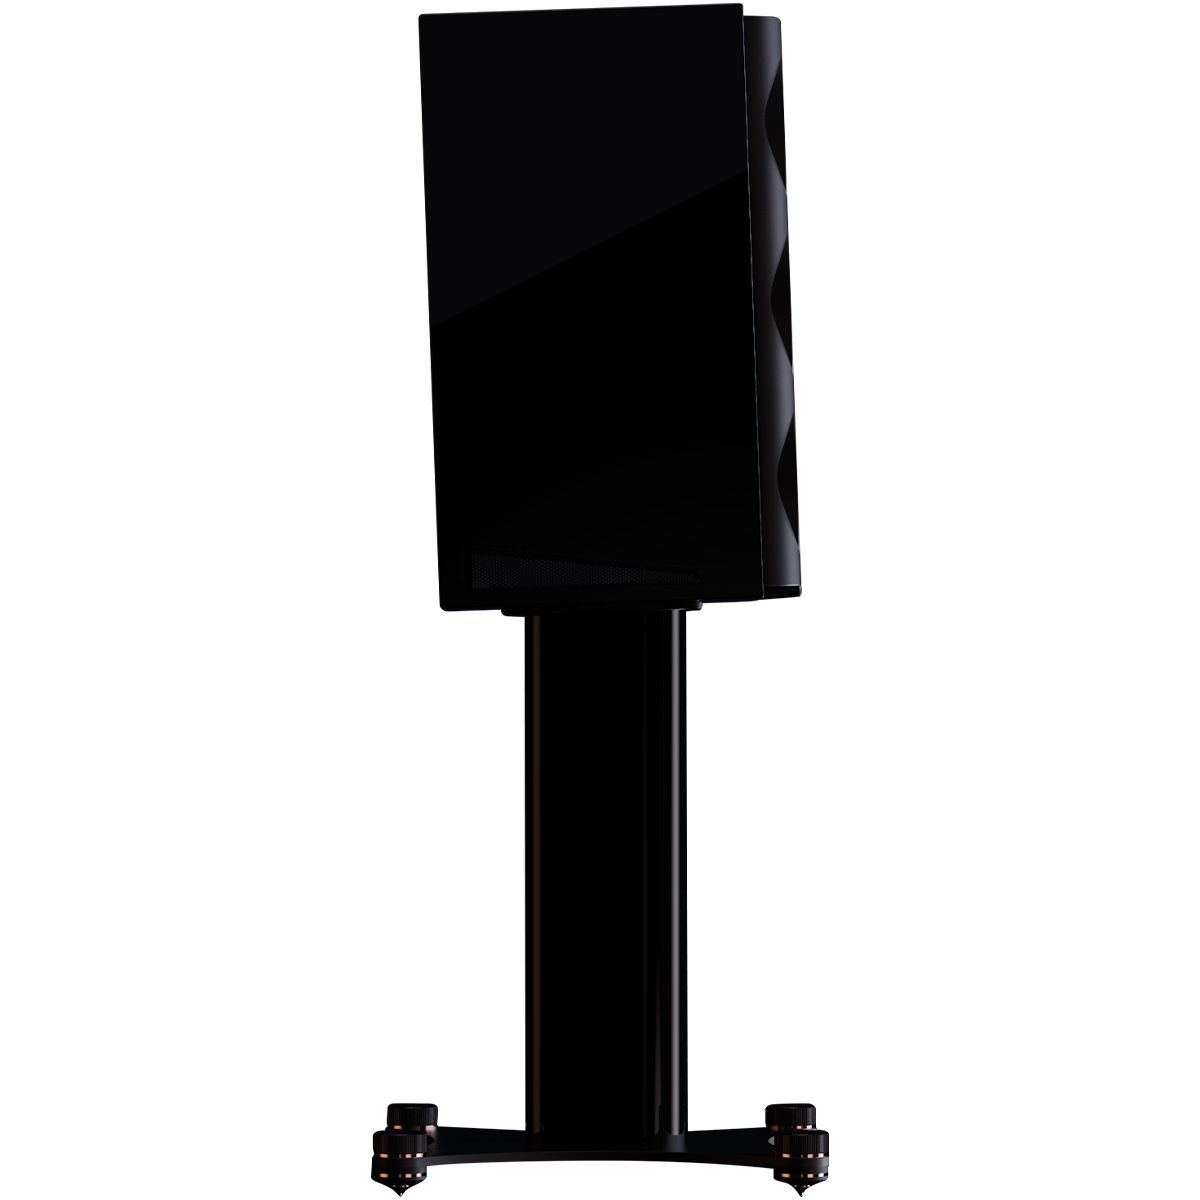 Perlisten R5m Monitor Speaker